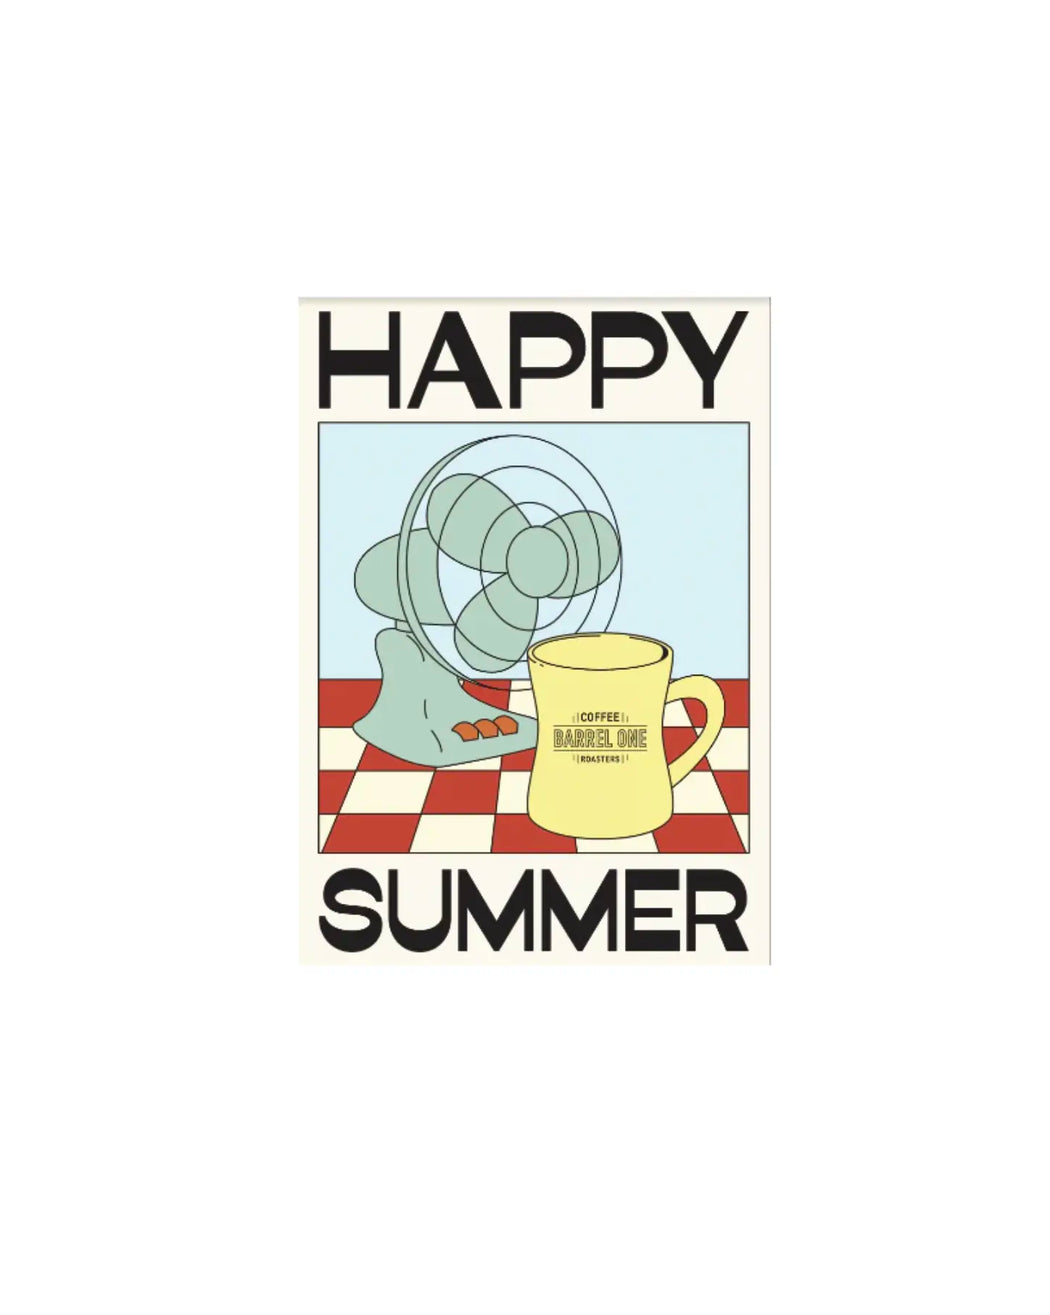 Barrel One's "Happy Summer" Poster